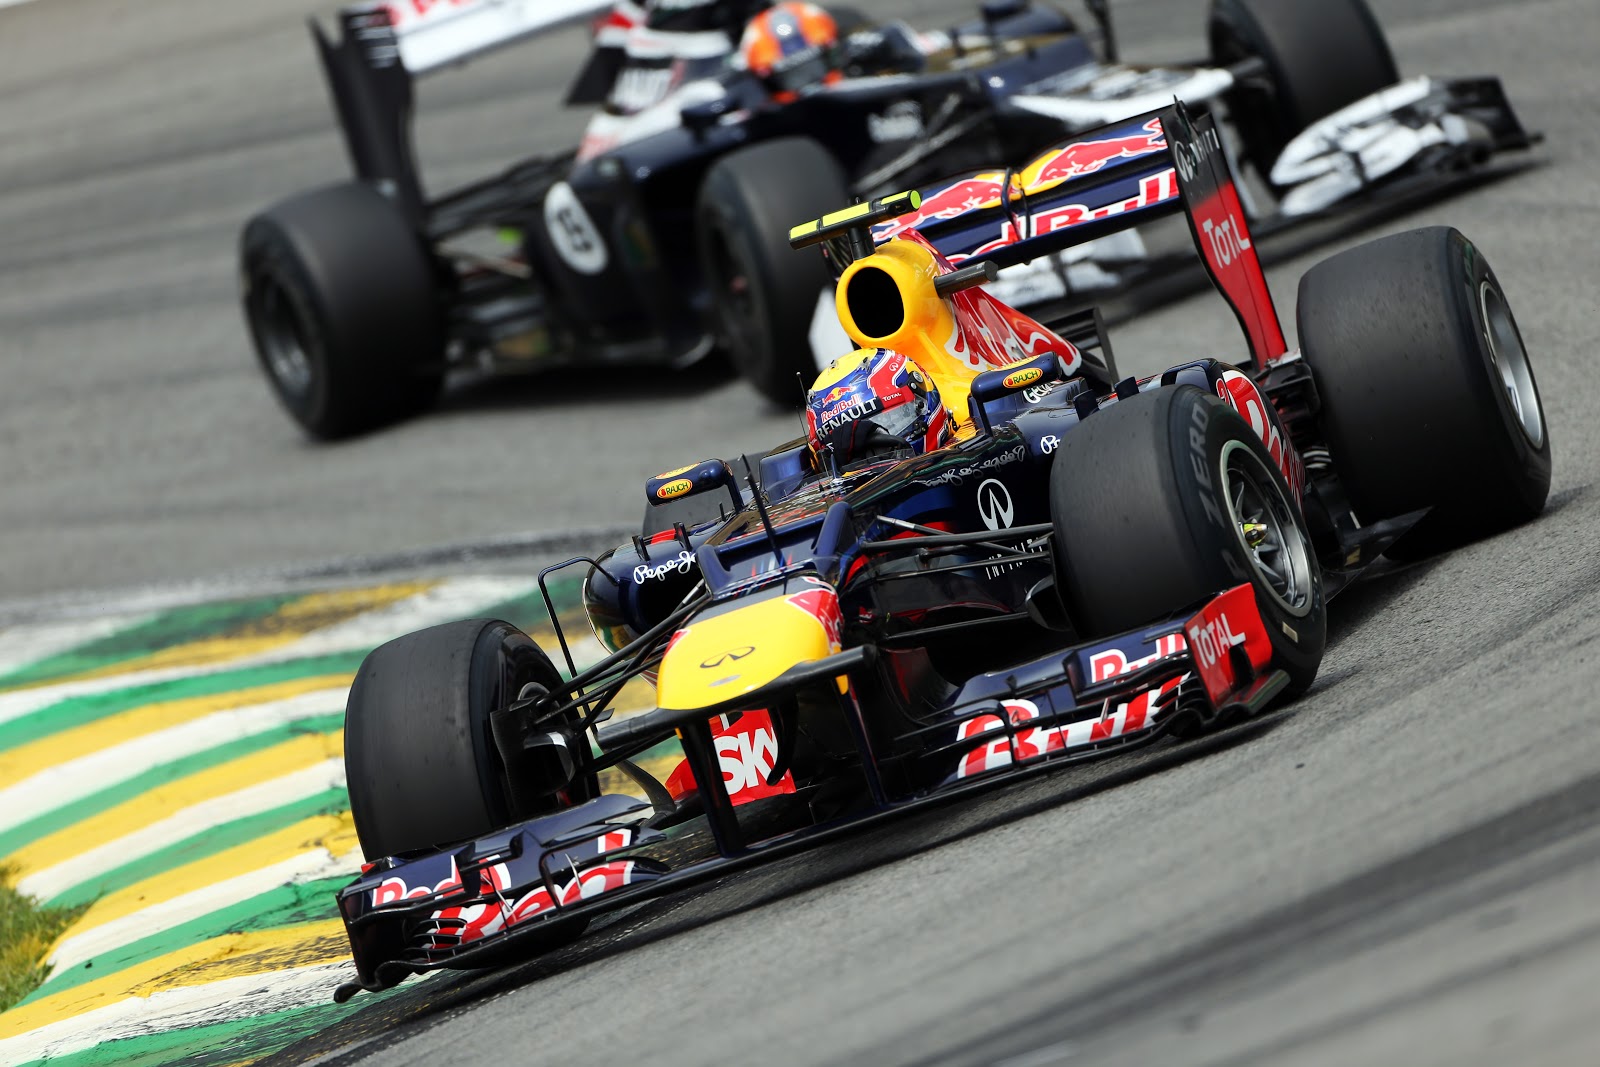 http://3.bp.blogspot.com/-BvMeapY5FX4/ULEs16vyAAI/AAAAAAAAw-A/bV2w02K6aPk/s1600/Mark+Webber+(AUS)+Red+Bull+Racing+RB8..jpg